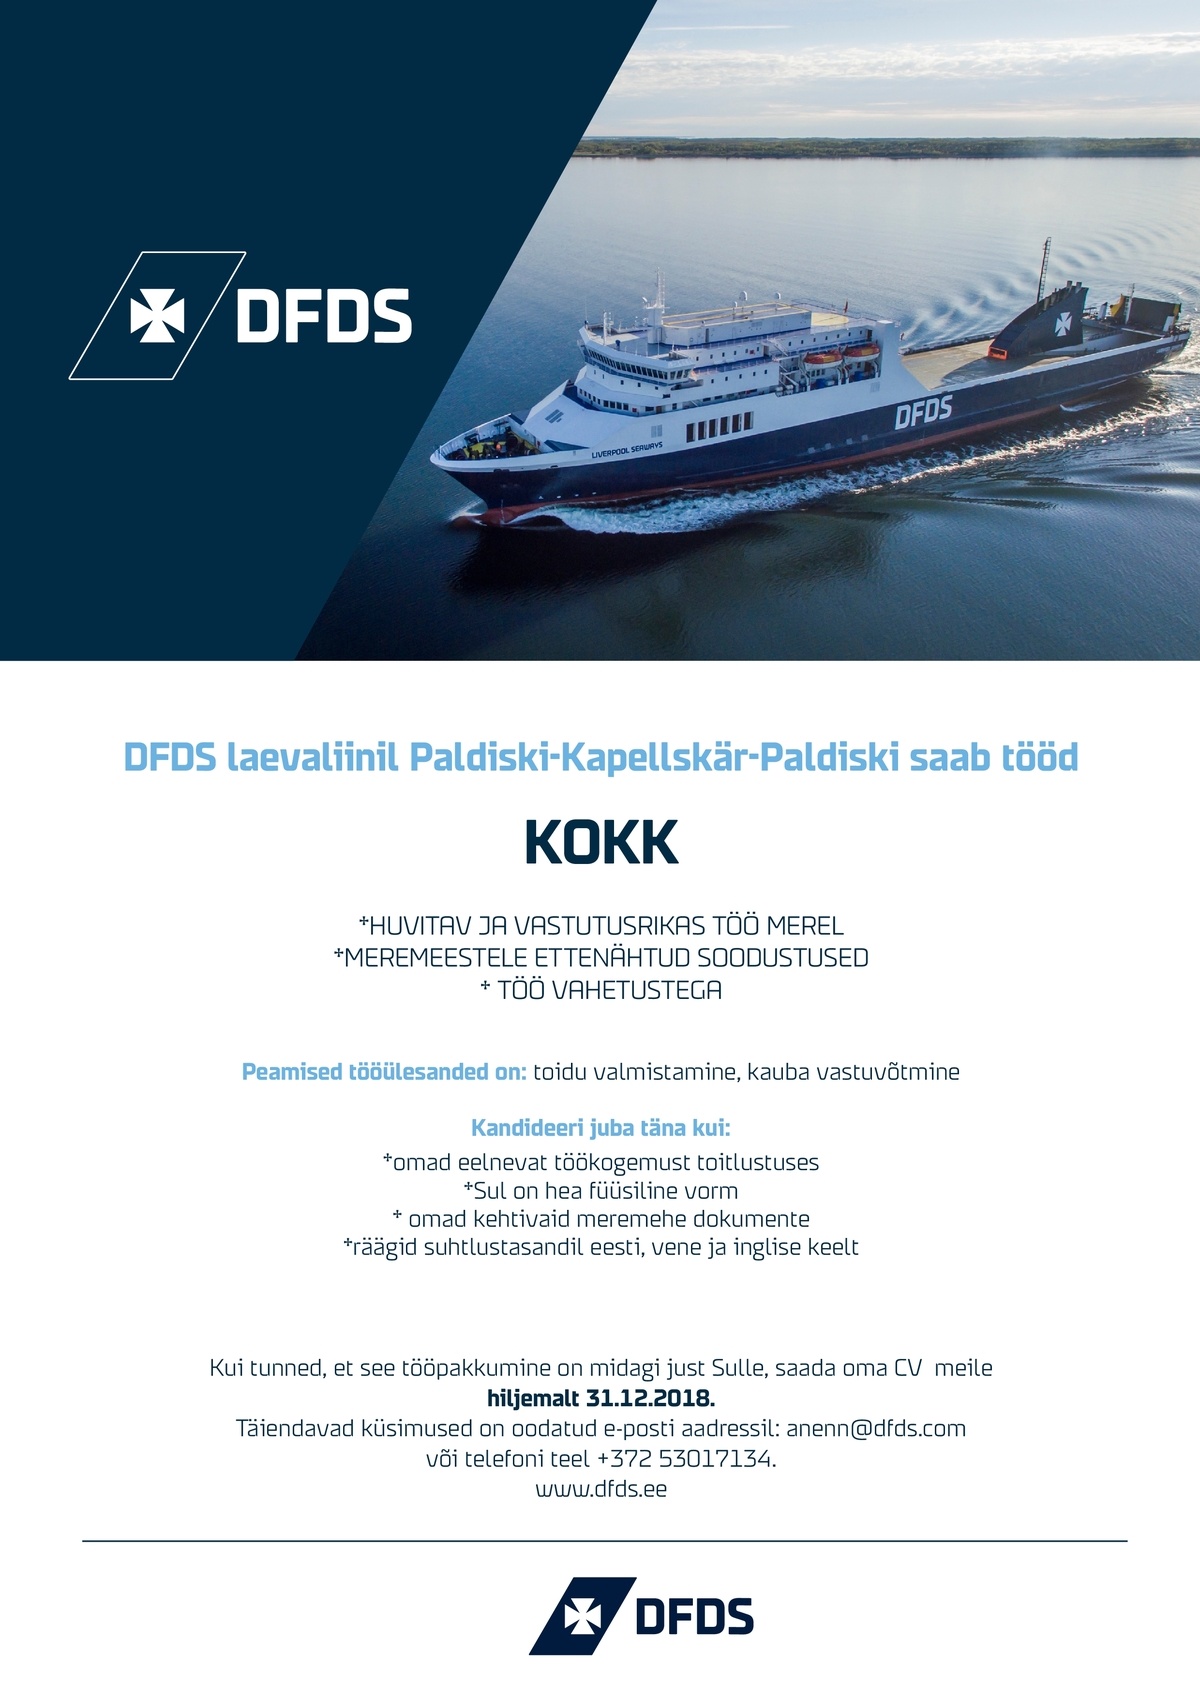 DFDS A/S Eesti filiaal Laevakokk!